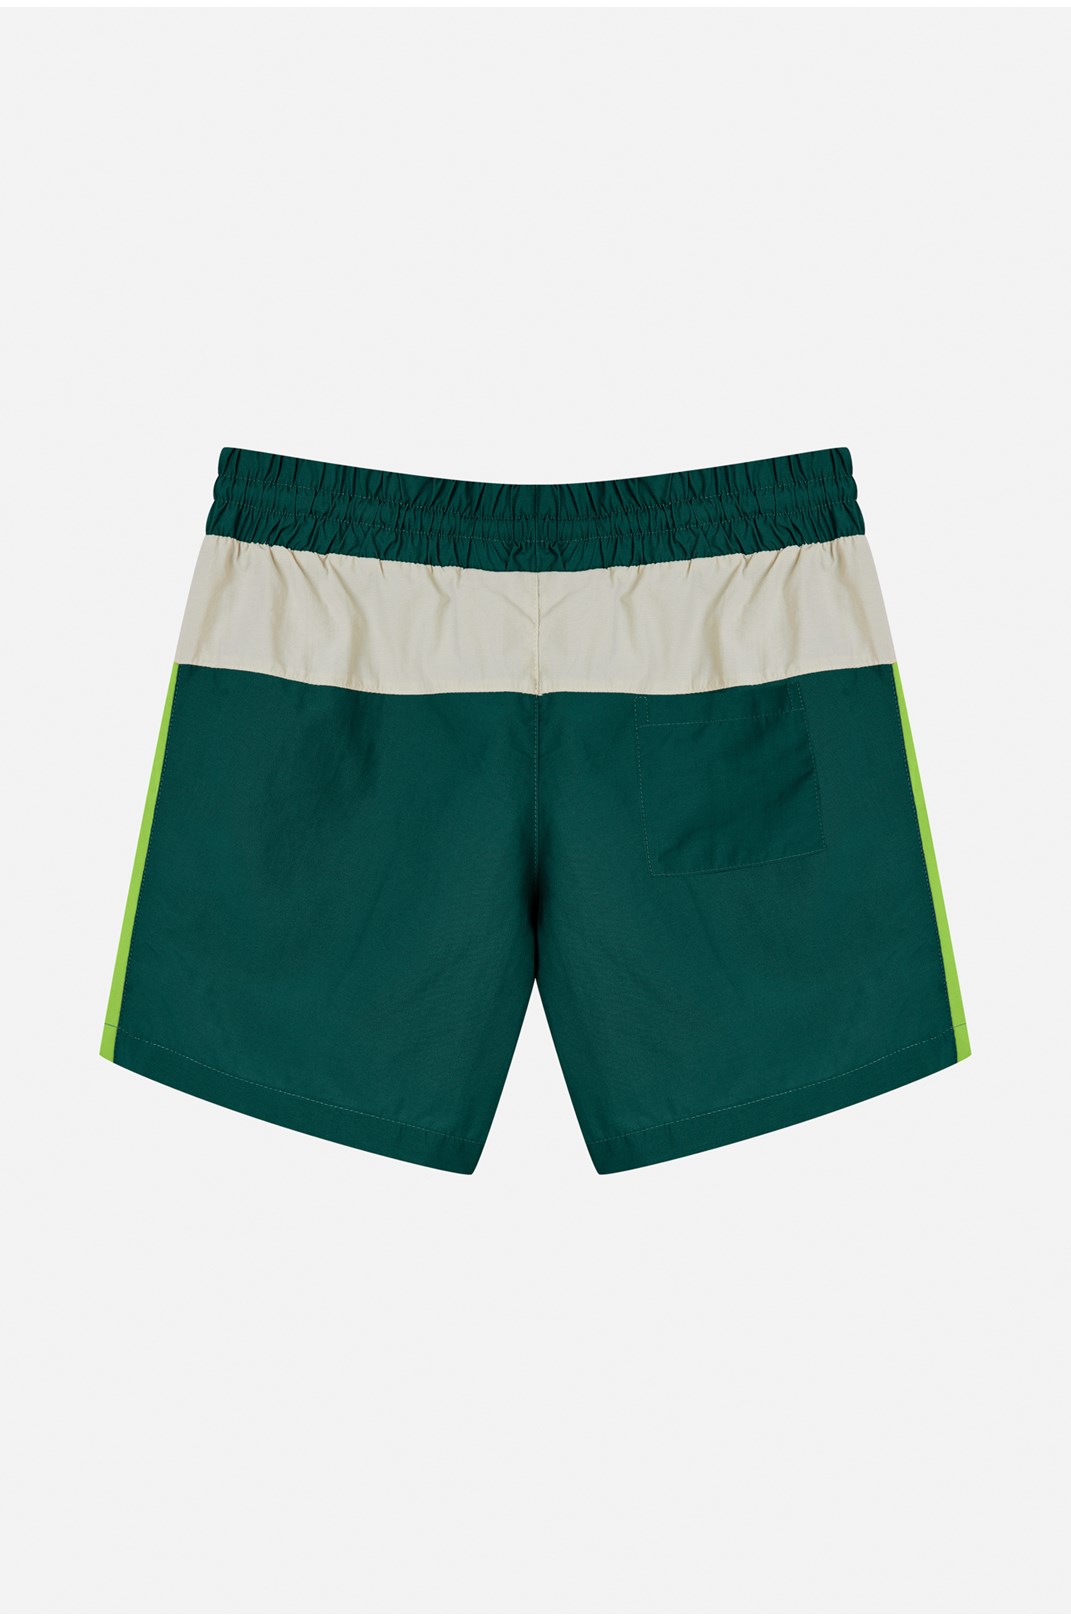 Shorts Approve Retropia Verde e Off White